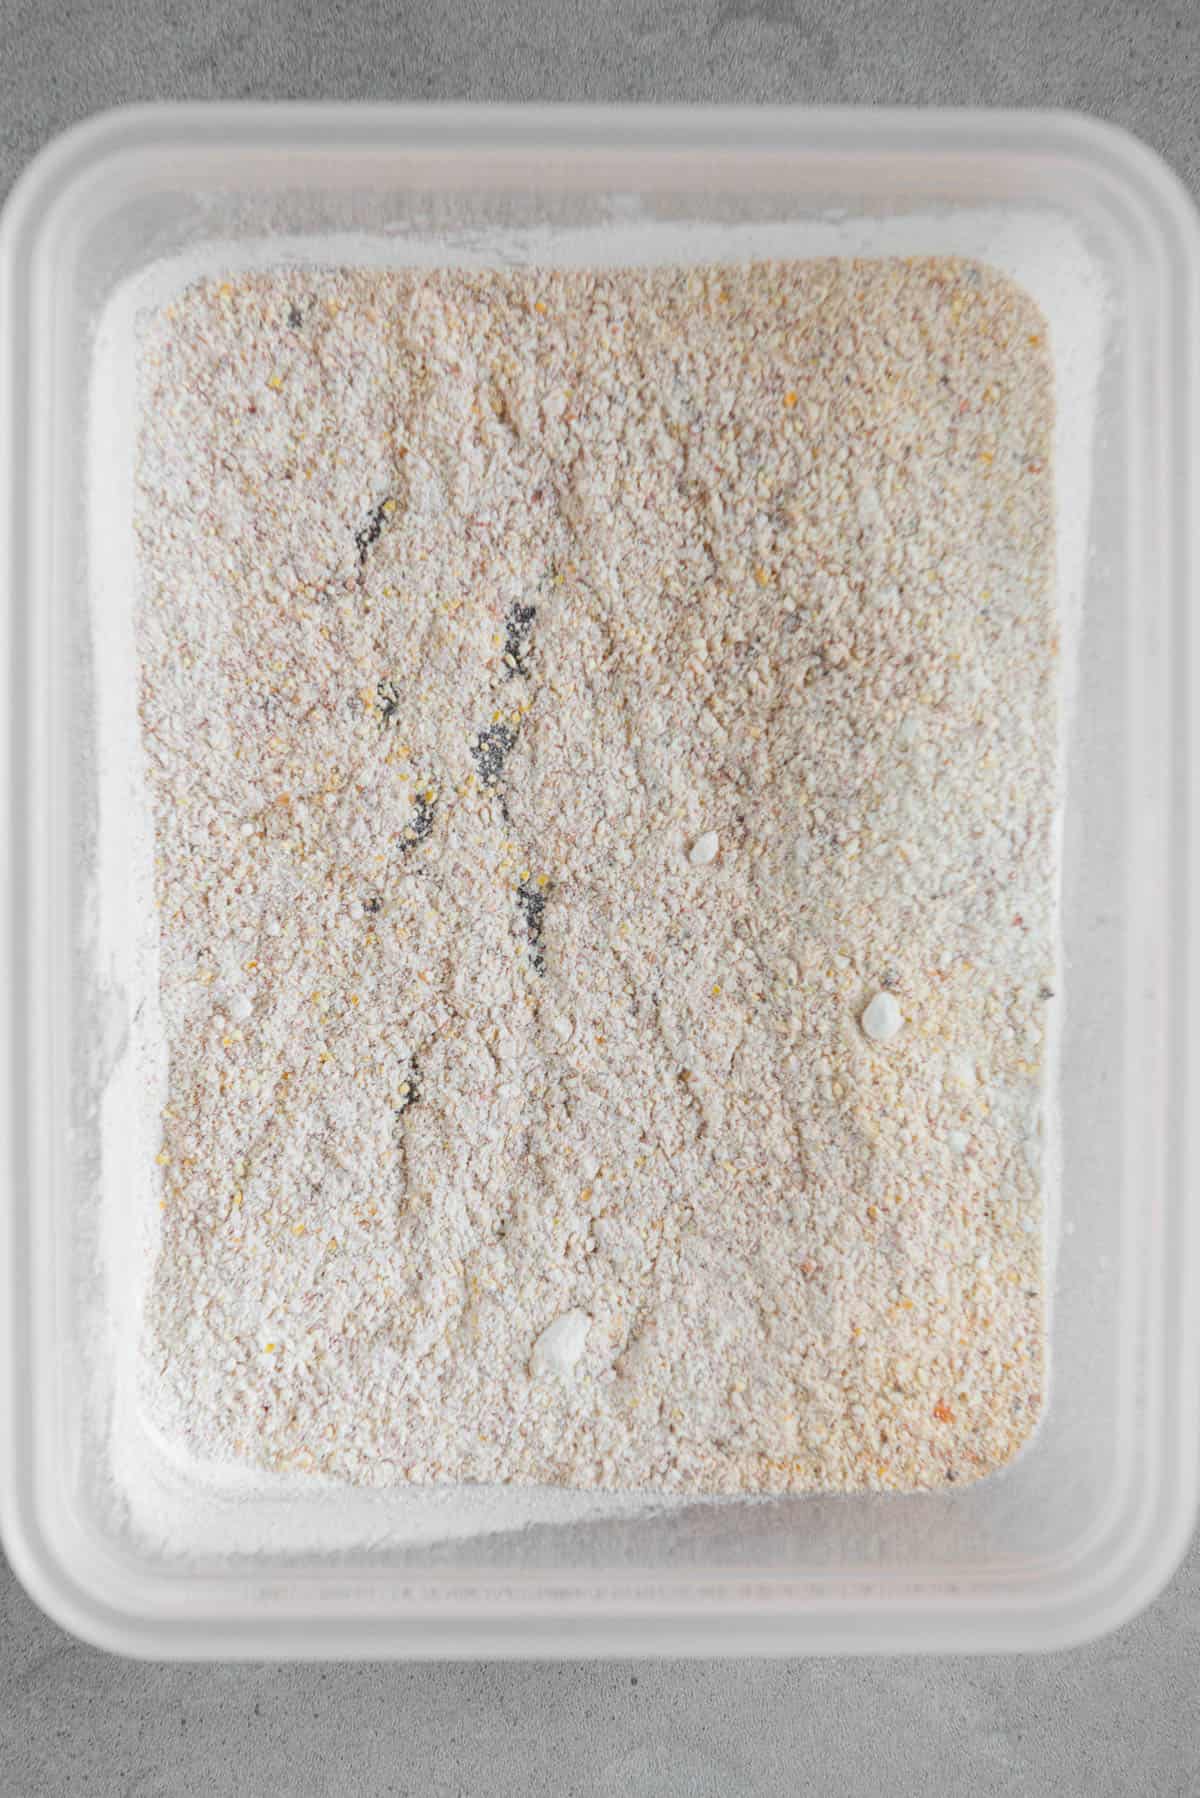 flour and cornmeal mixture